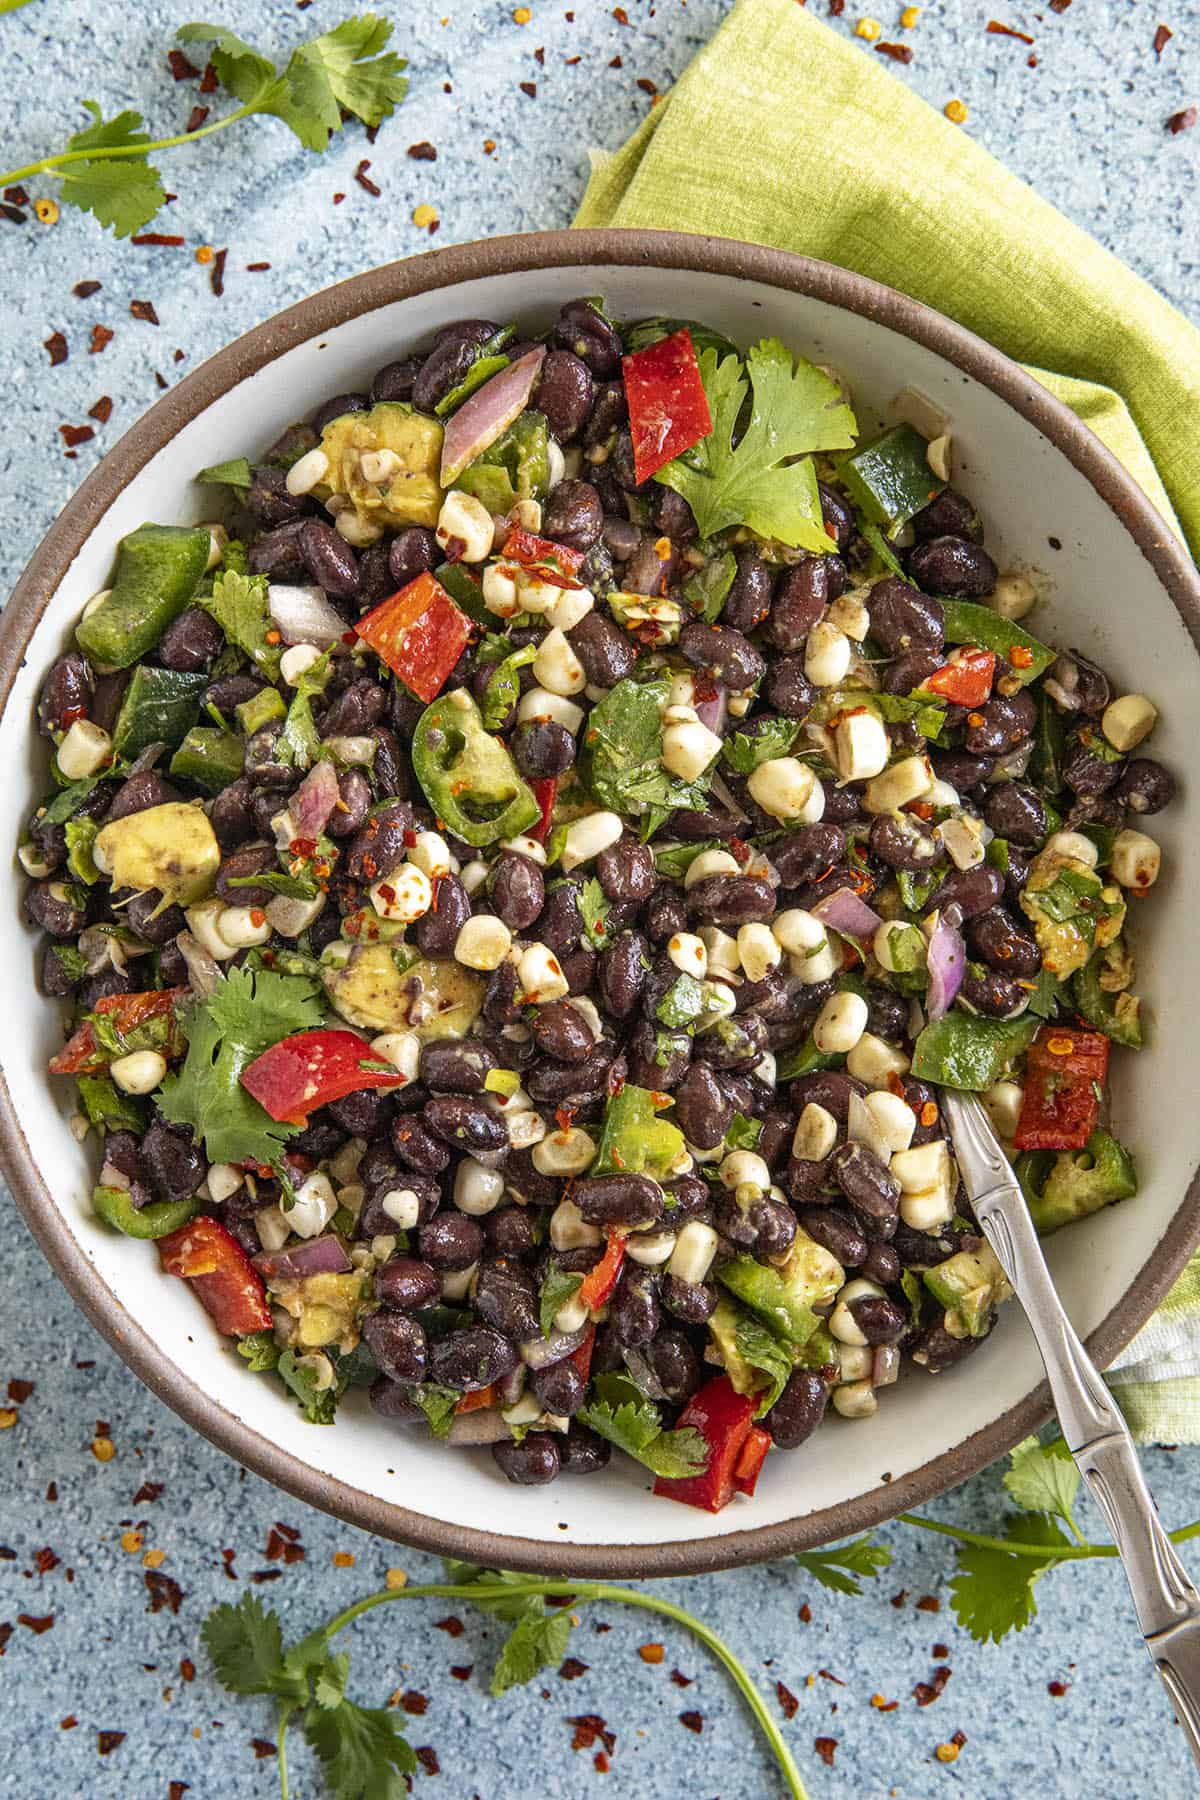 Black Bean Salad Recipe